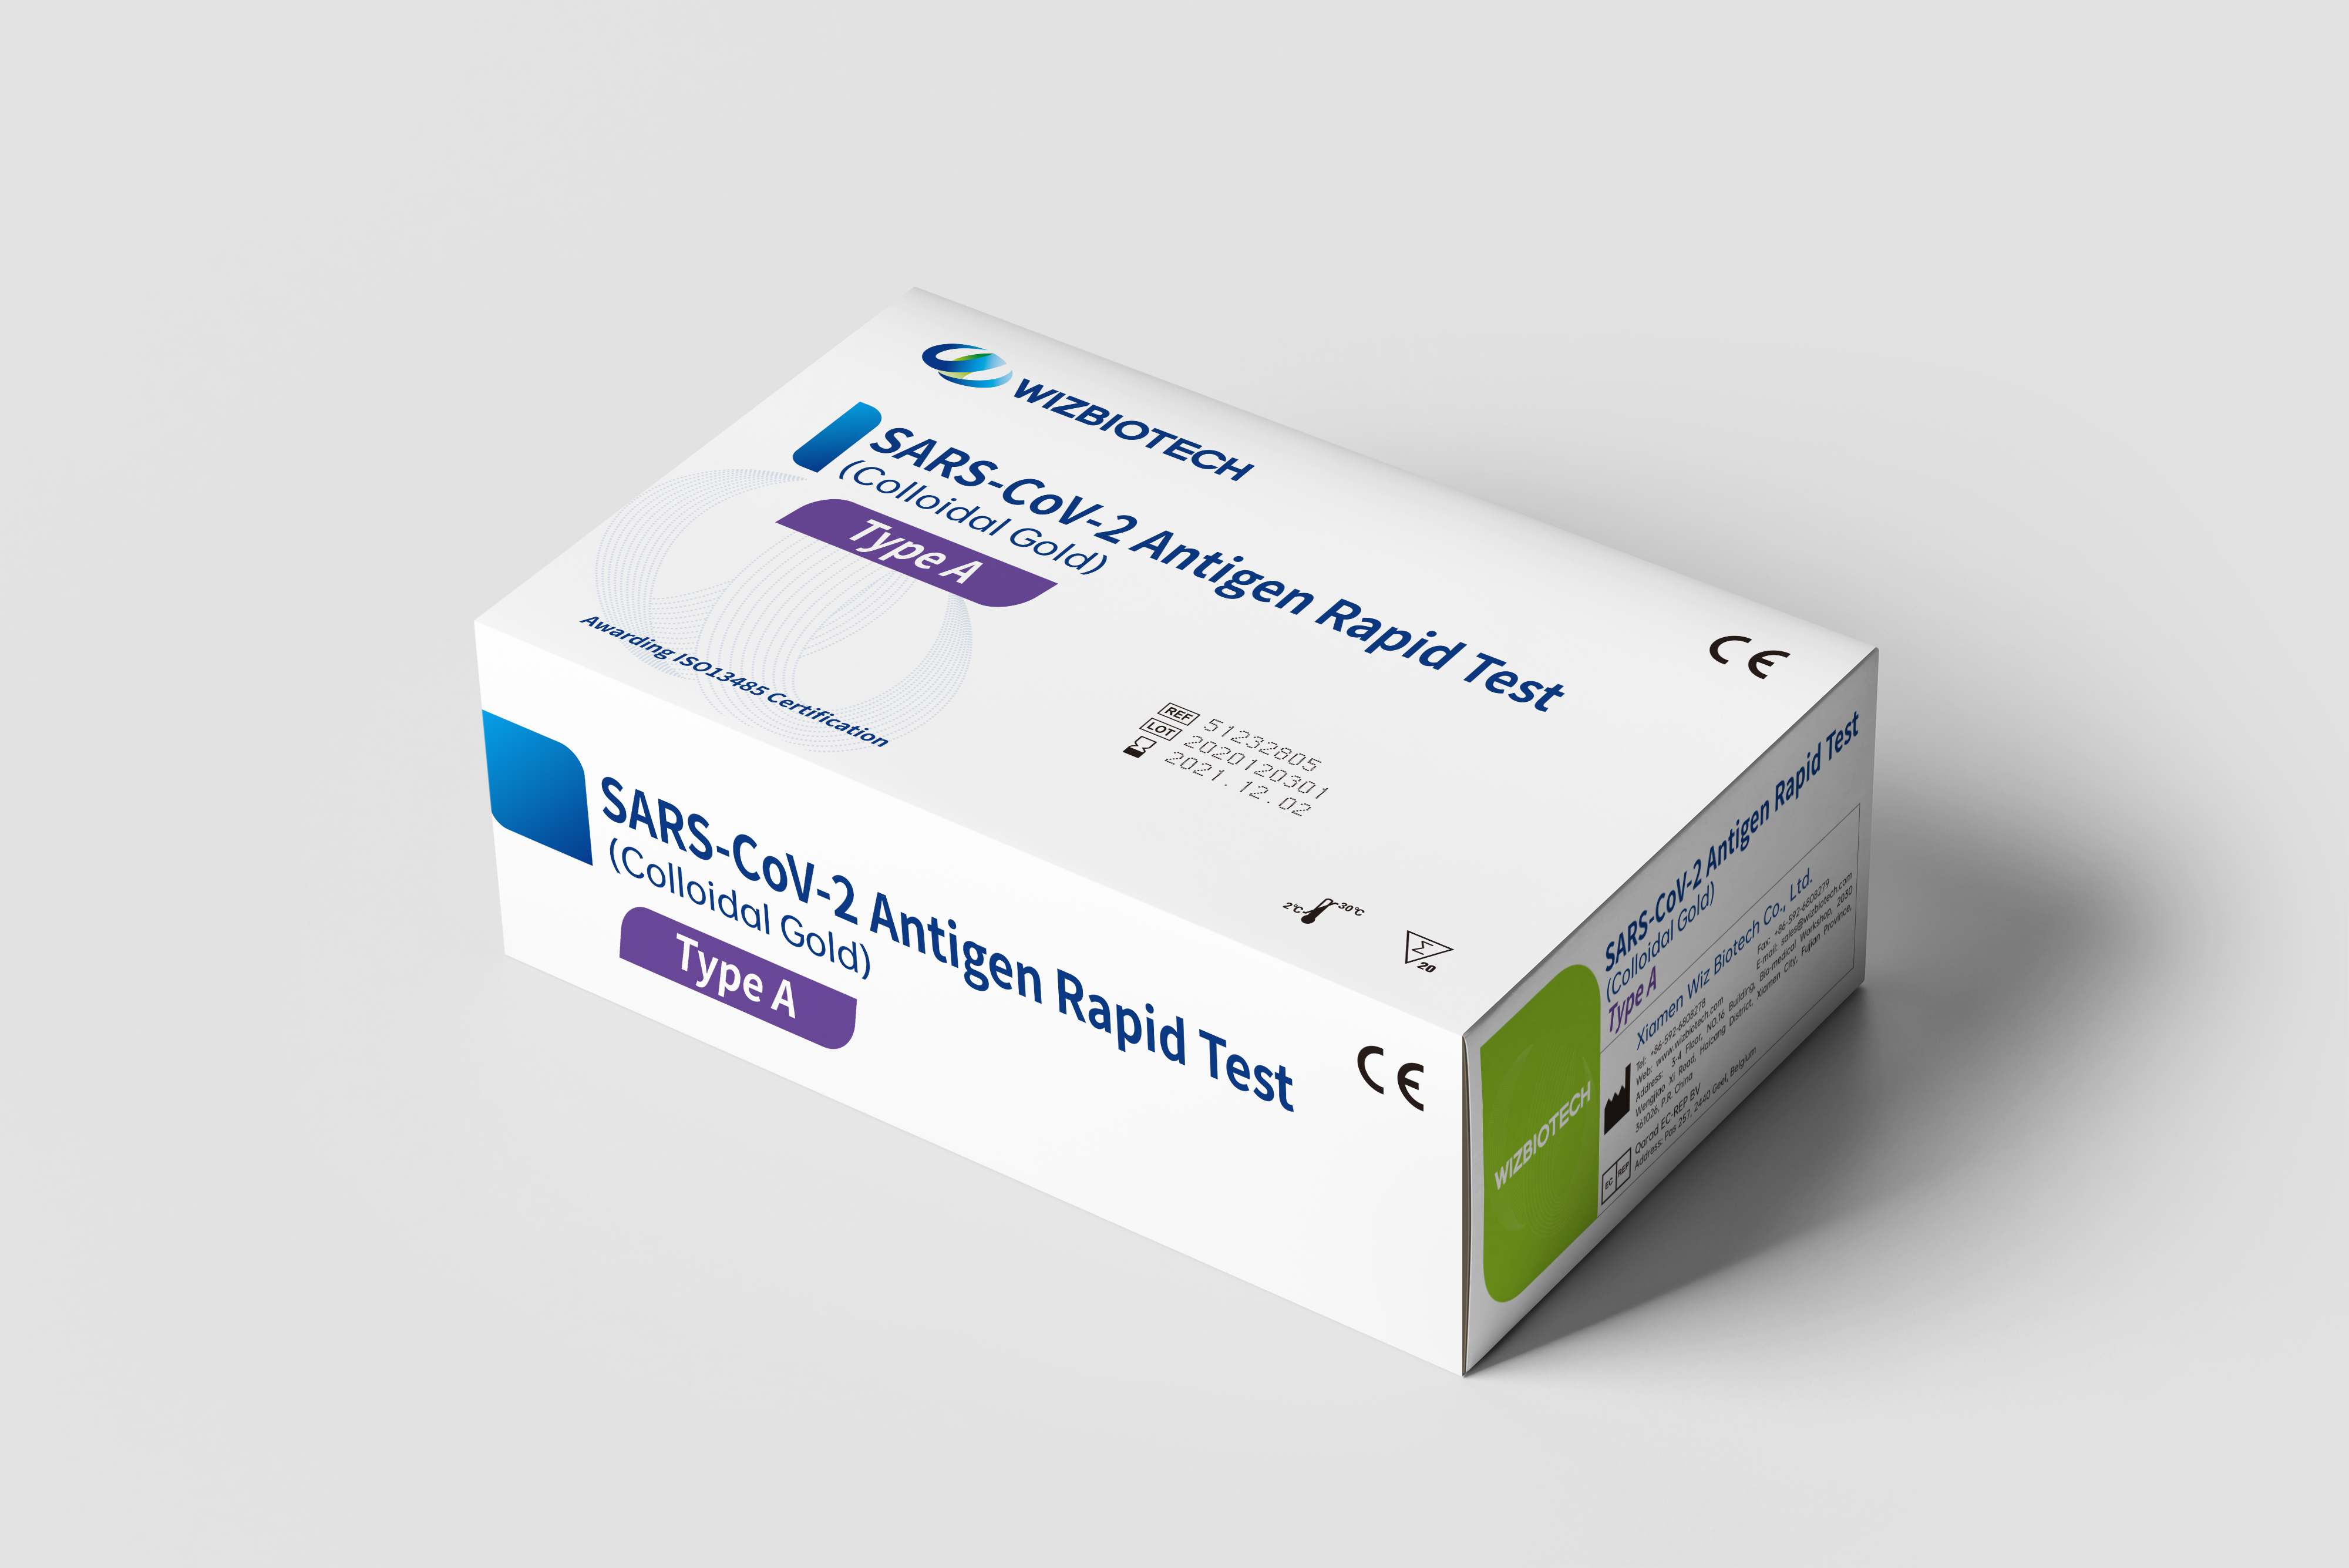 SARS-CoV-2 Antigen Rapid Test (Colloidal Gold)